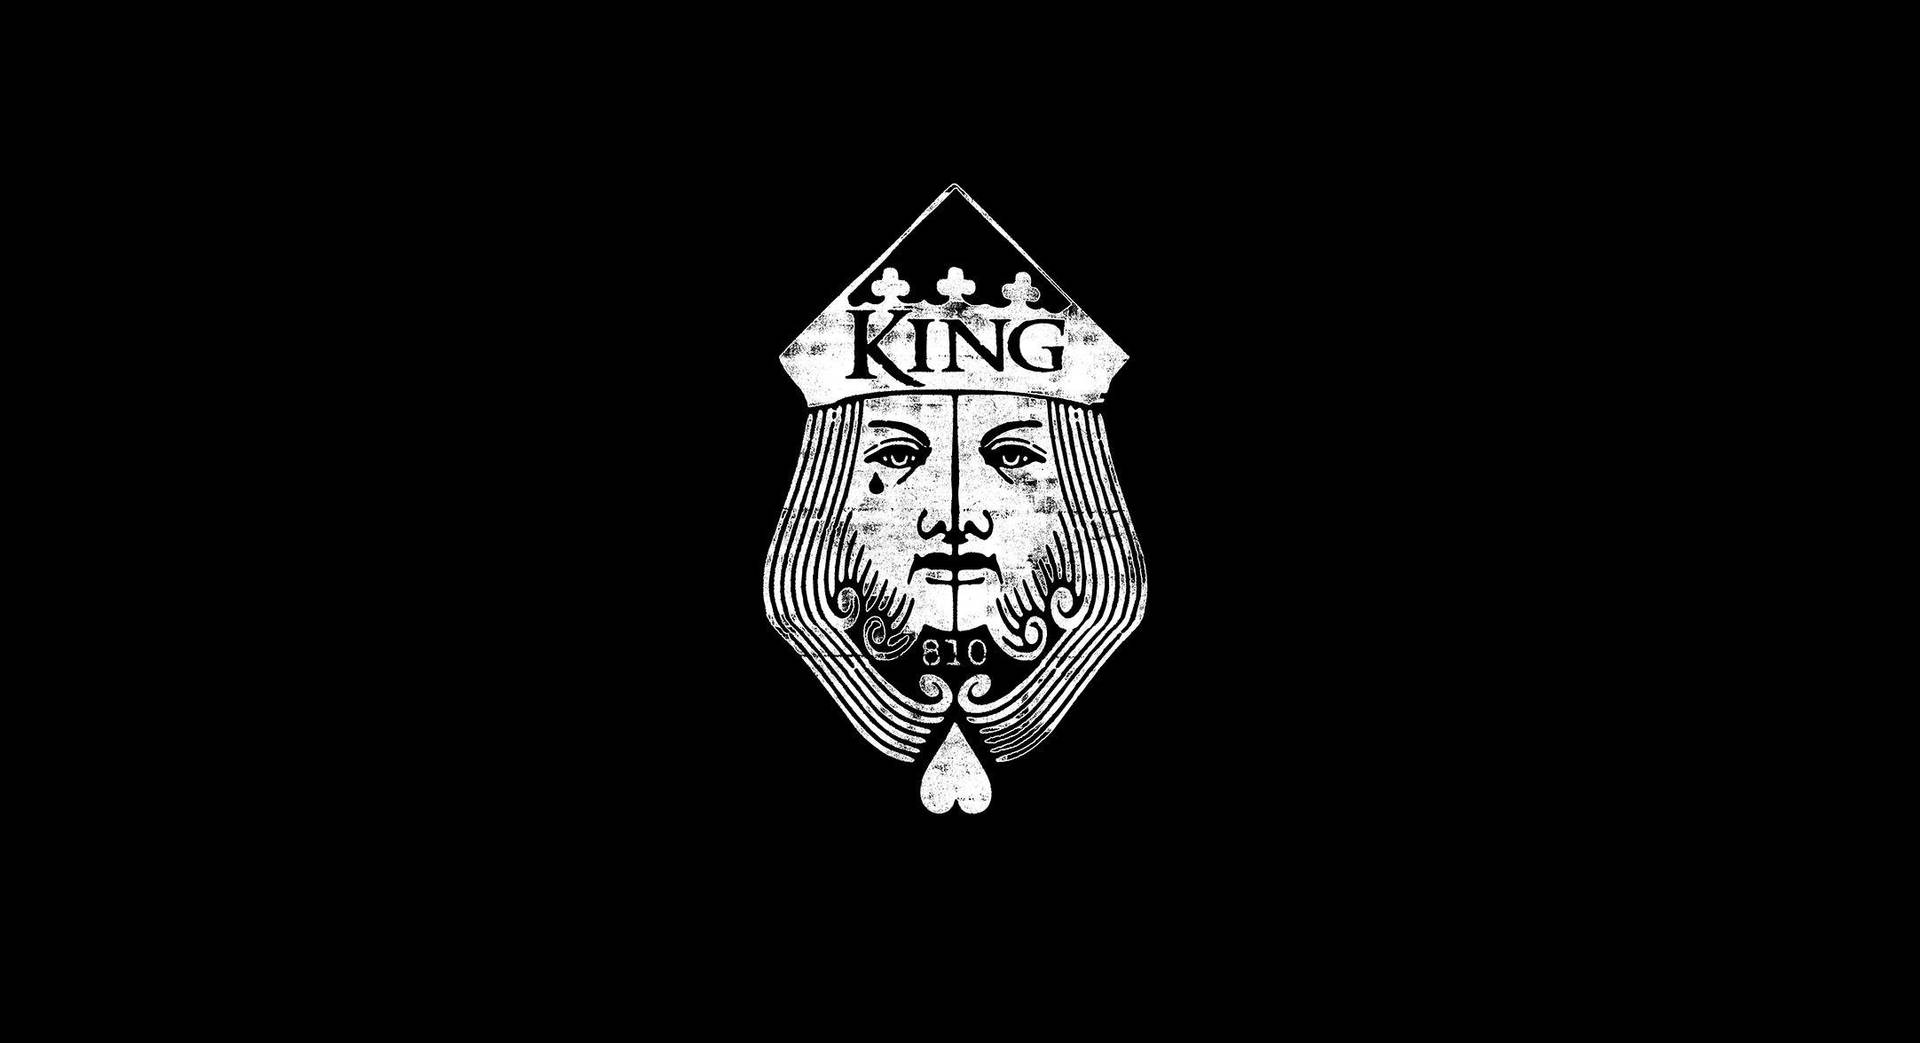 Logode Cool Card King Genial Fondo de pantalla